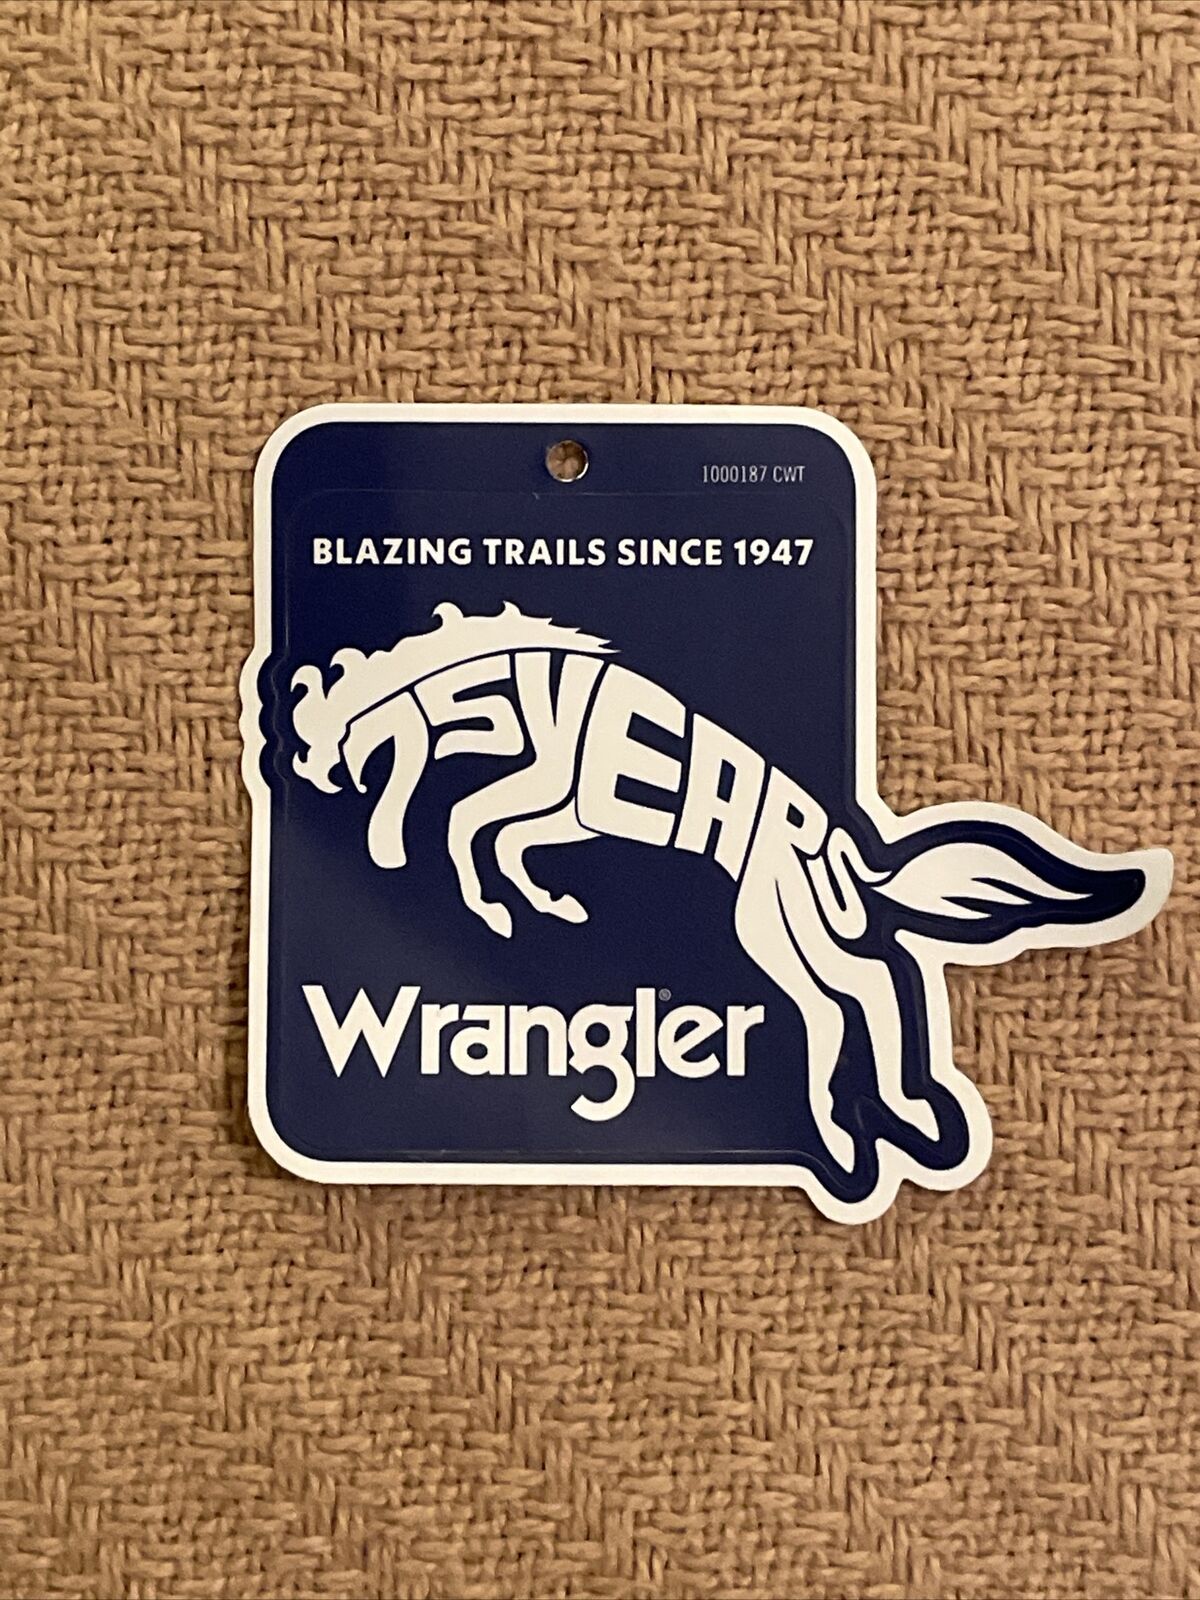 🐴 Wrangler 75 Years Hanging Tag Sticker - Blazing Trails Since 1947 Anniversary Без бренда